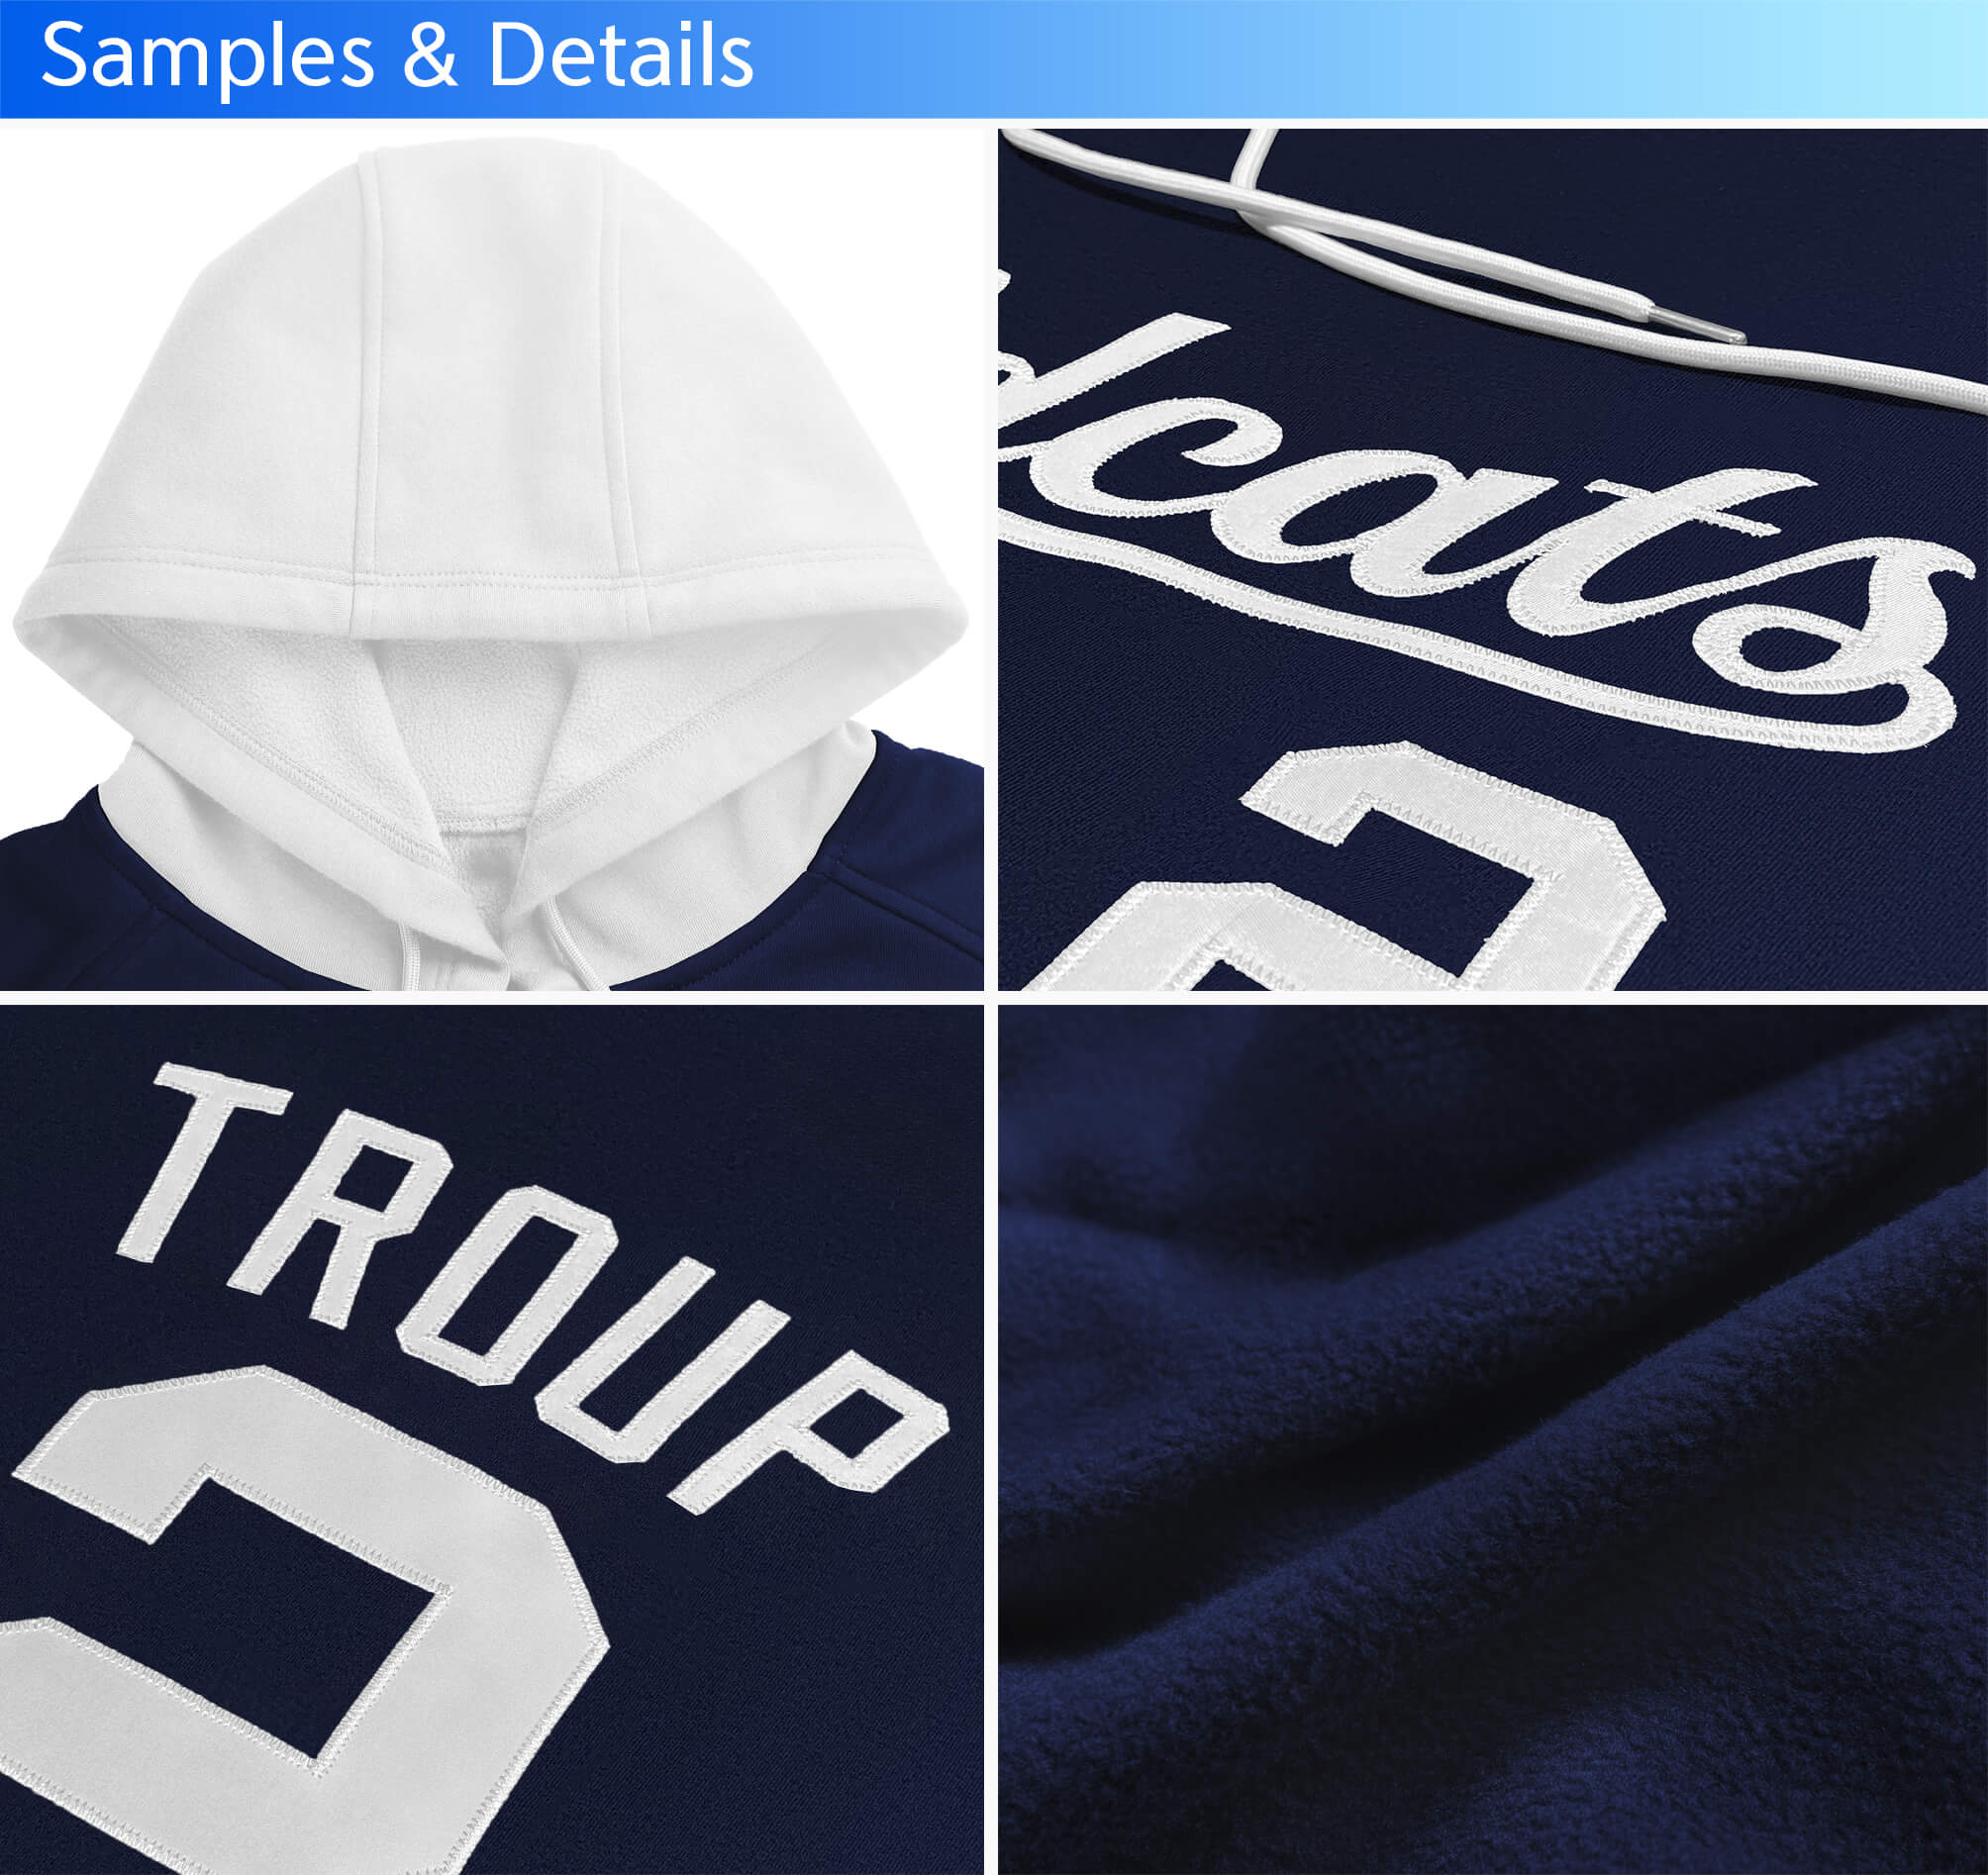 hoodies for men stitched details & sample